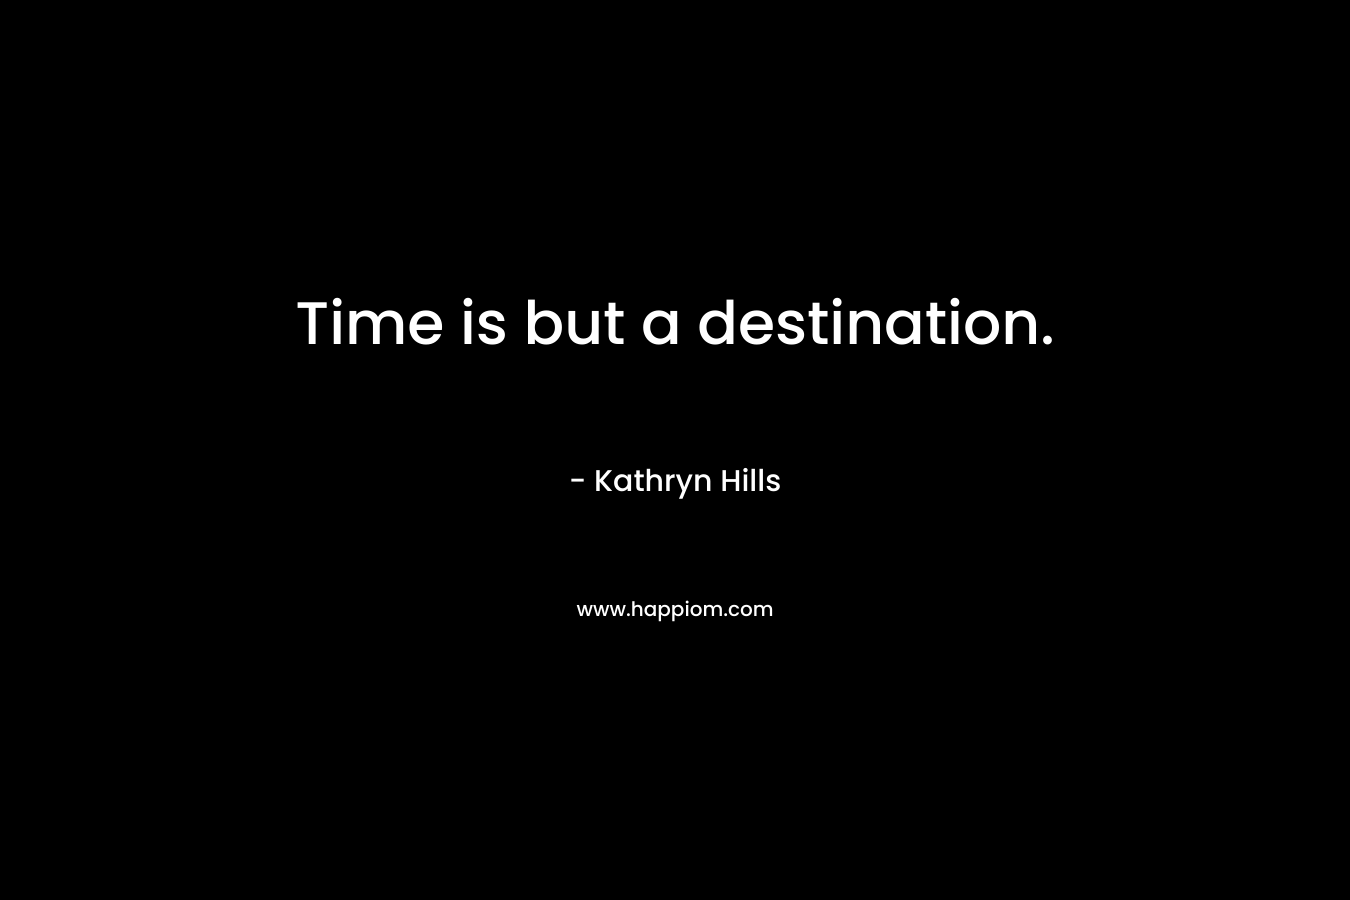 Time is but a destination.